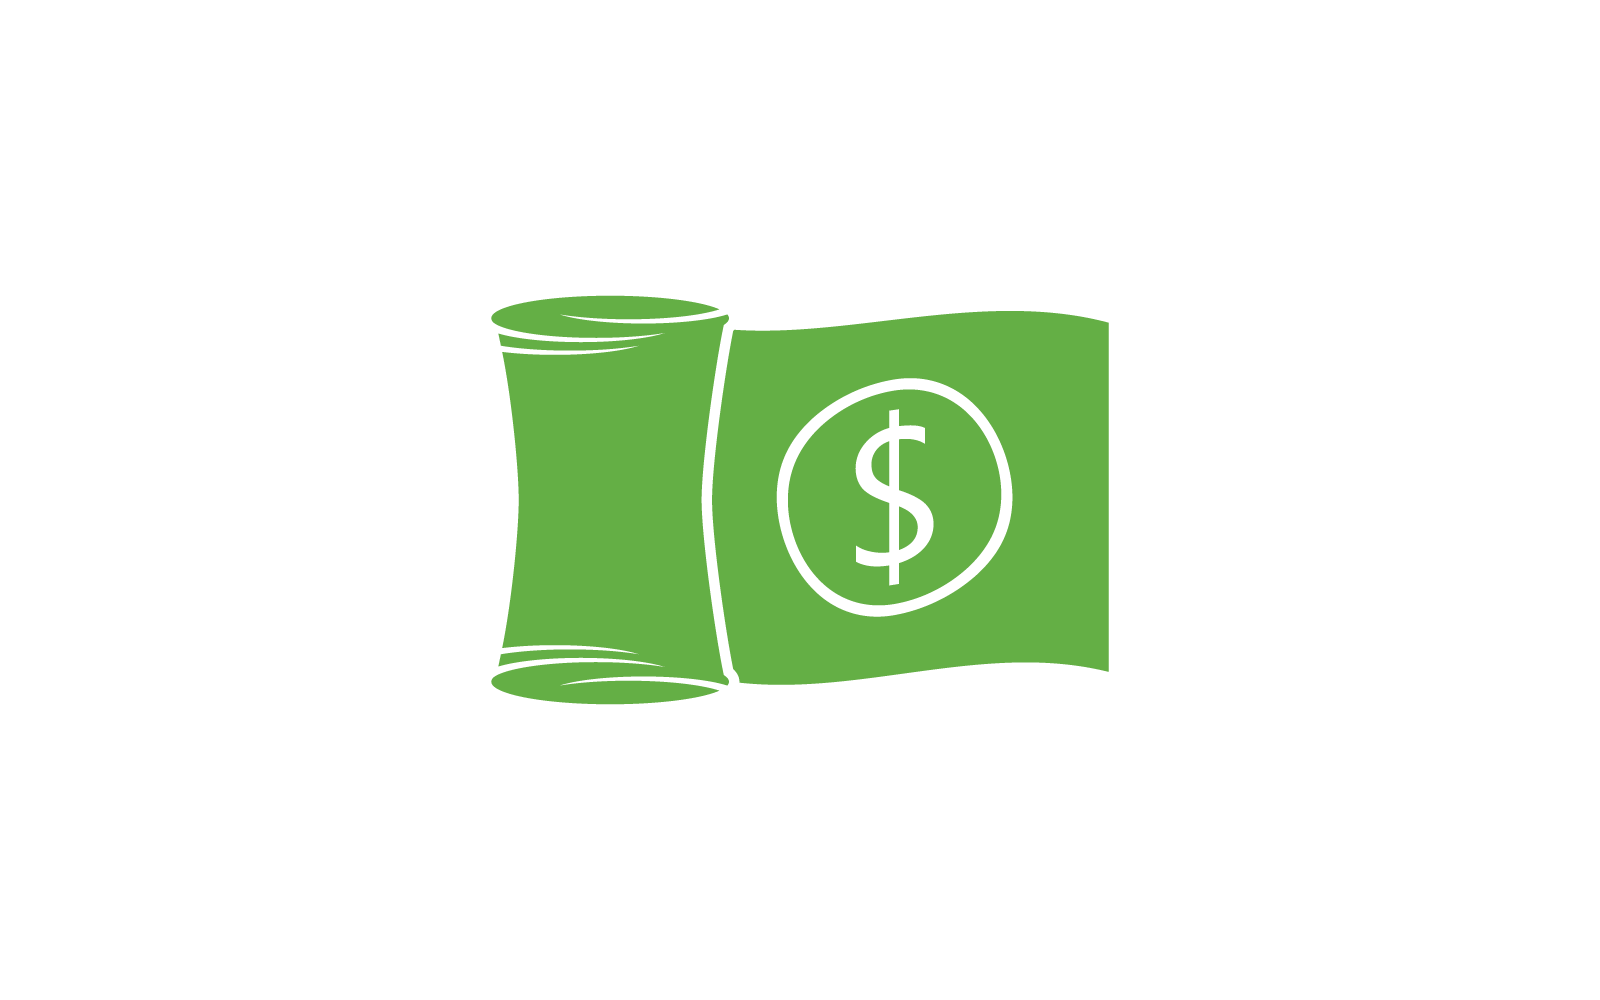 Business money banking logo illustration vector flat design